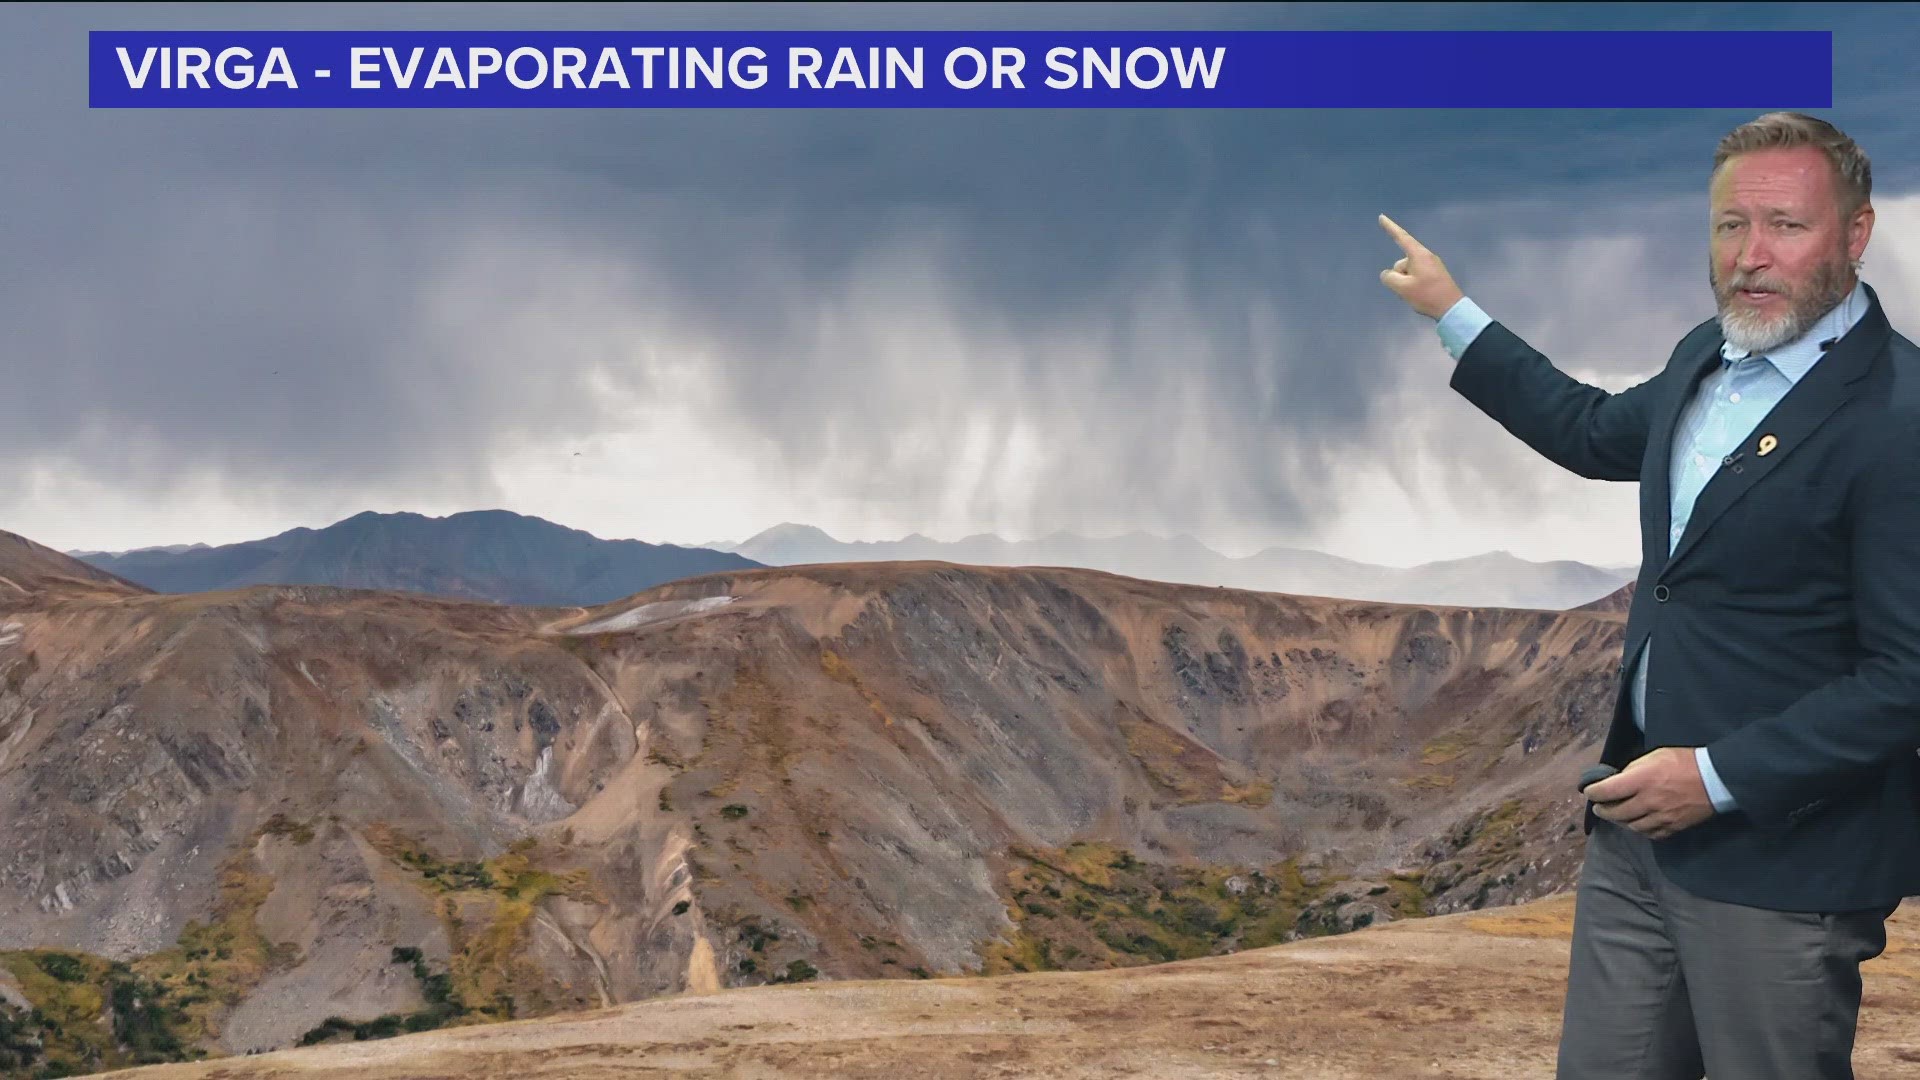 Meteorologist Cory Reppenhagen explains the weather phenomenon where rain or snow evaporates before reaching the ground.